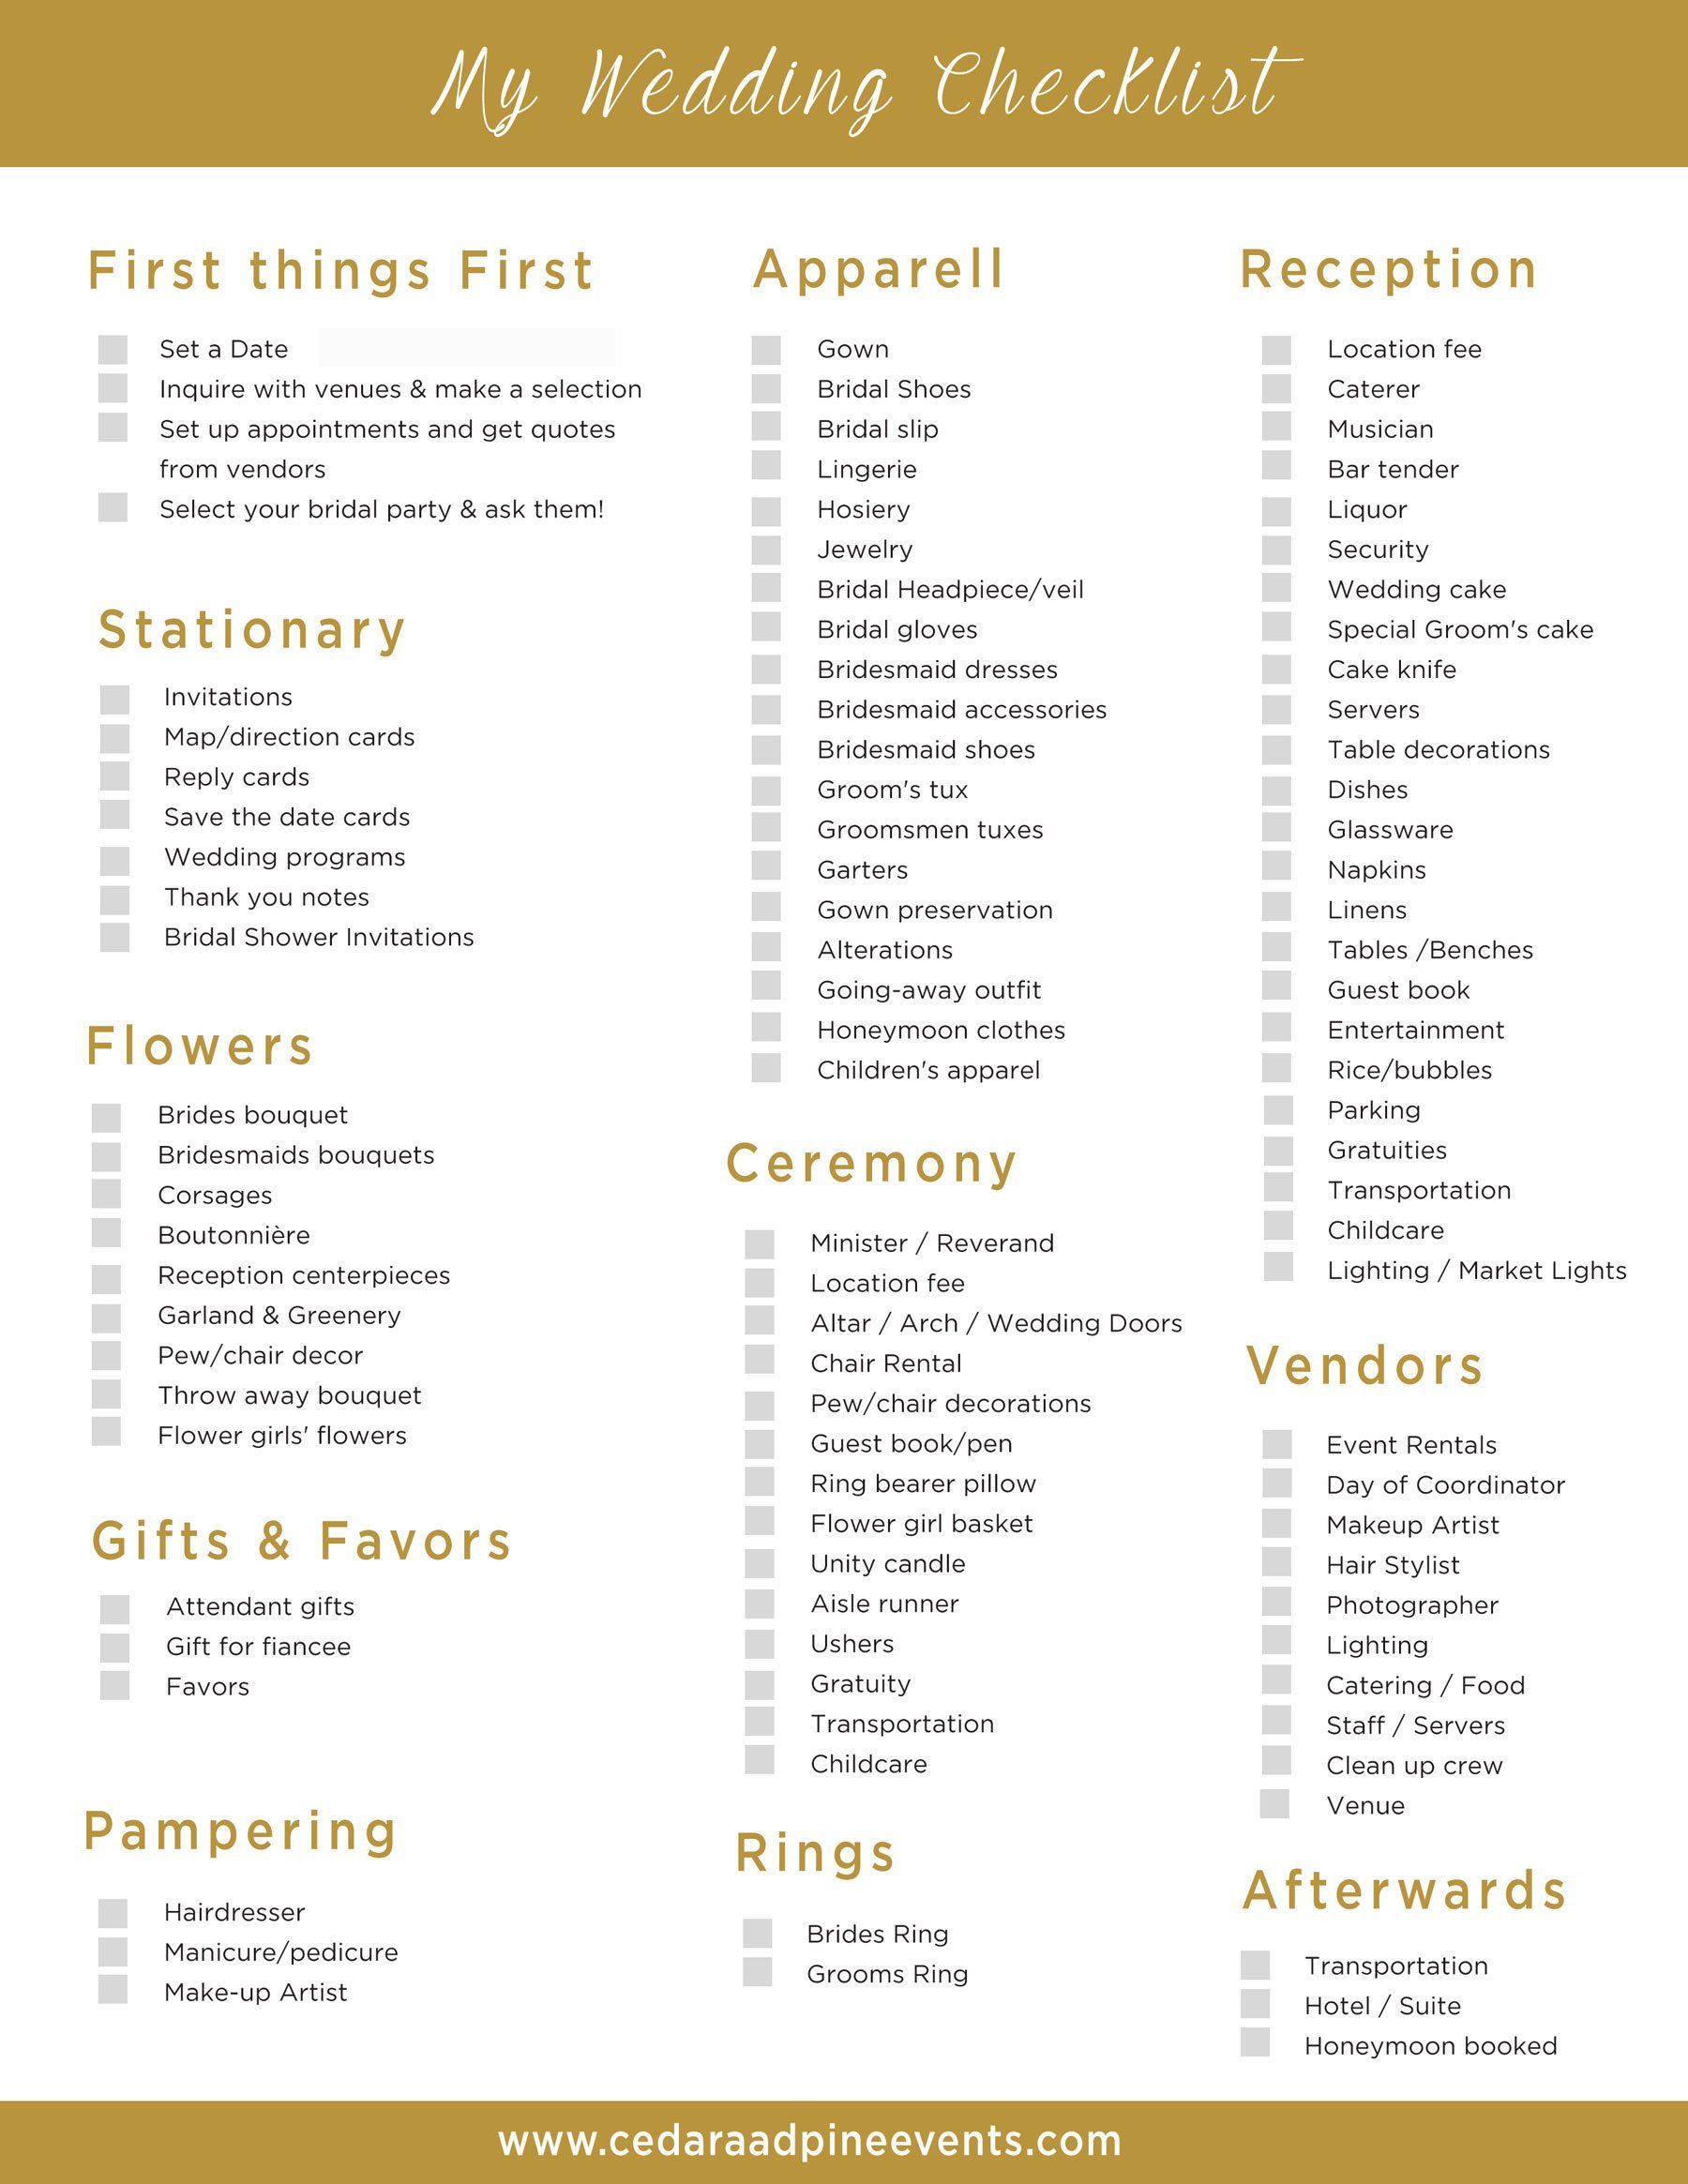 16 ultimate wedding Checklist ideas